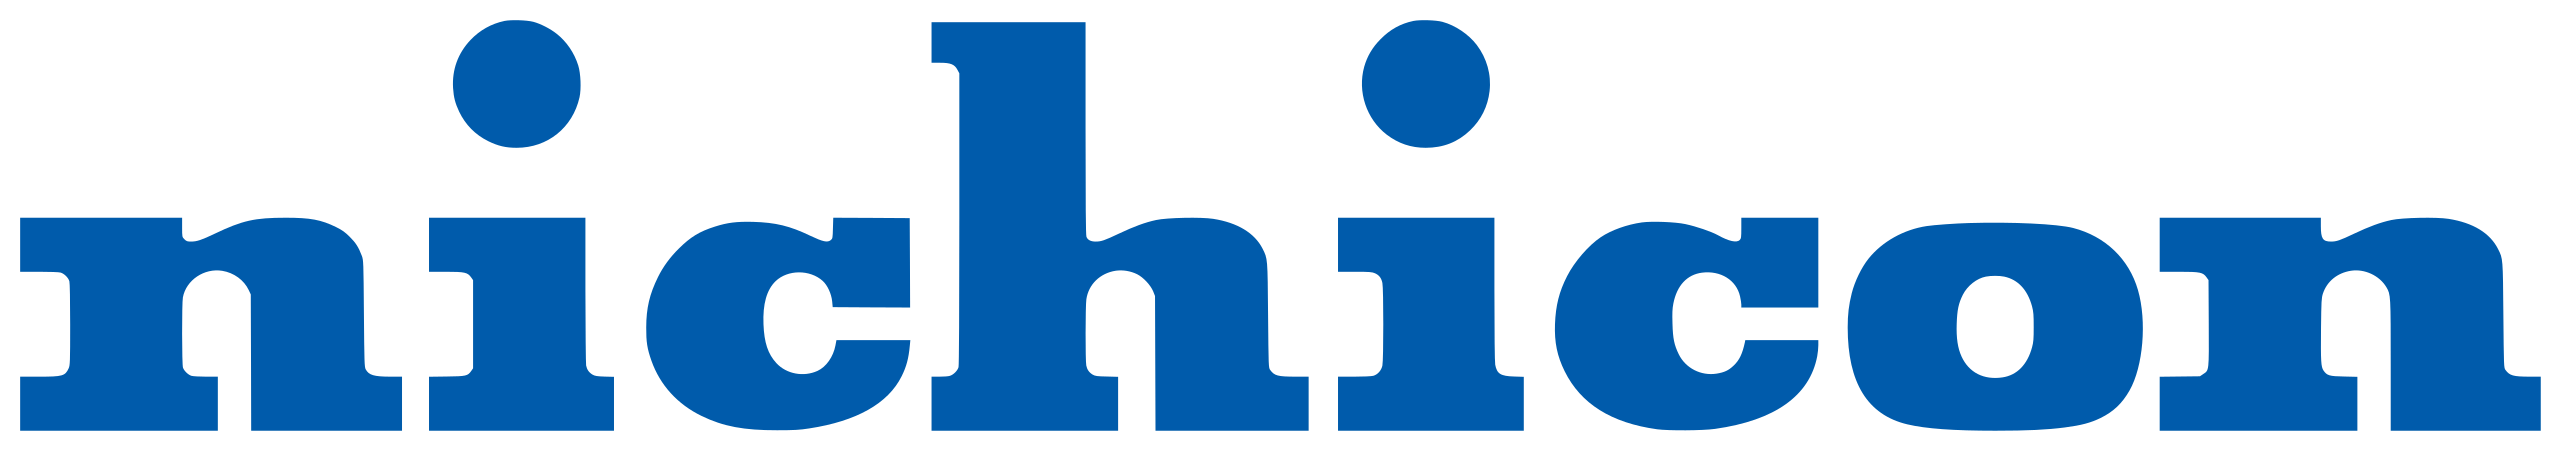 2560px-Nichicon_company_logo.svg-1